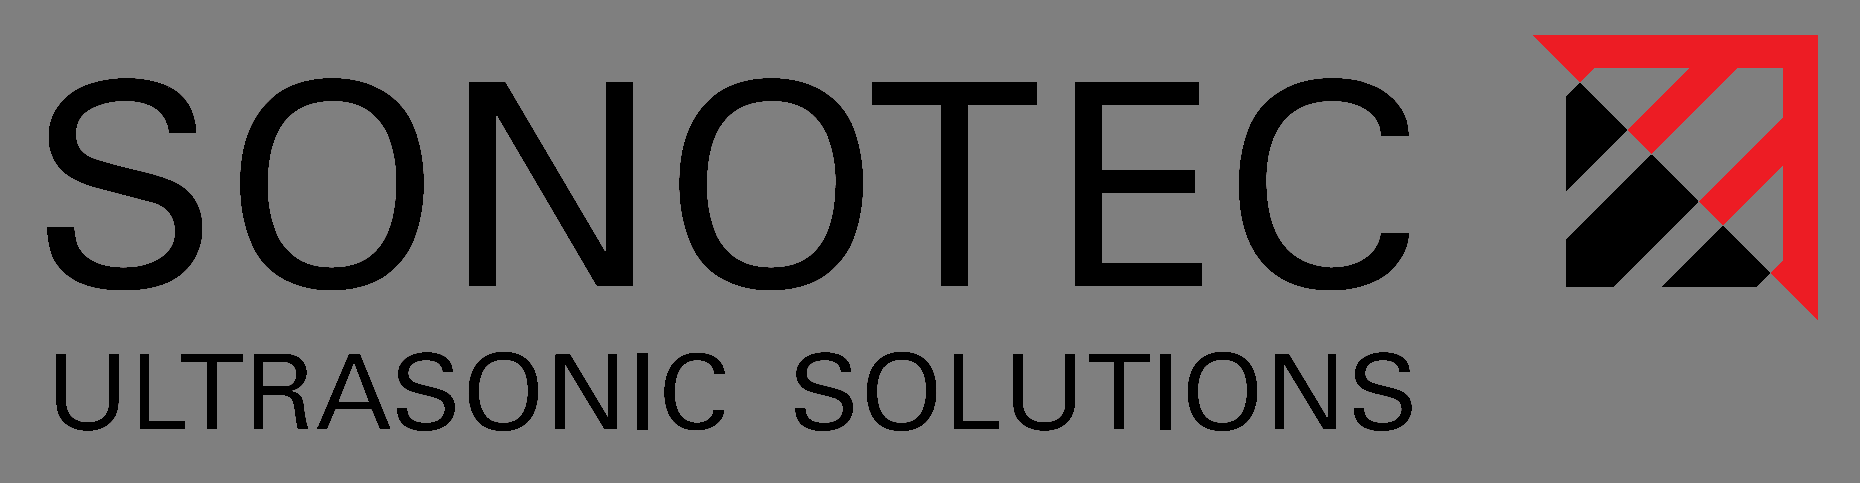 Sonotec Logo